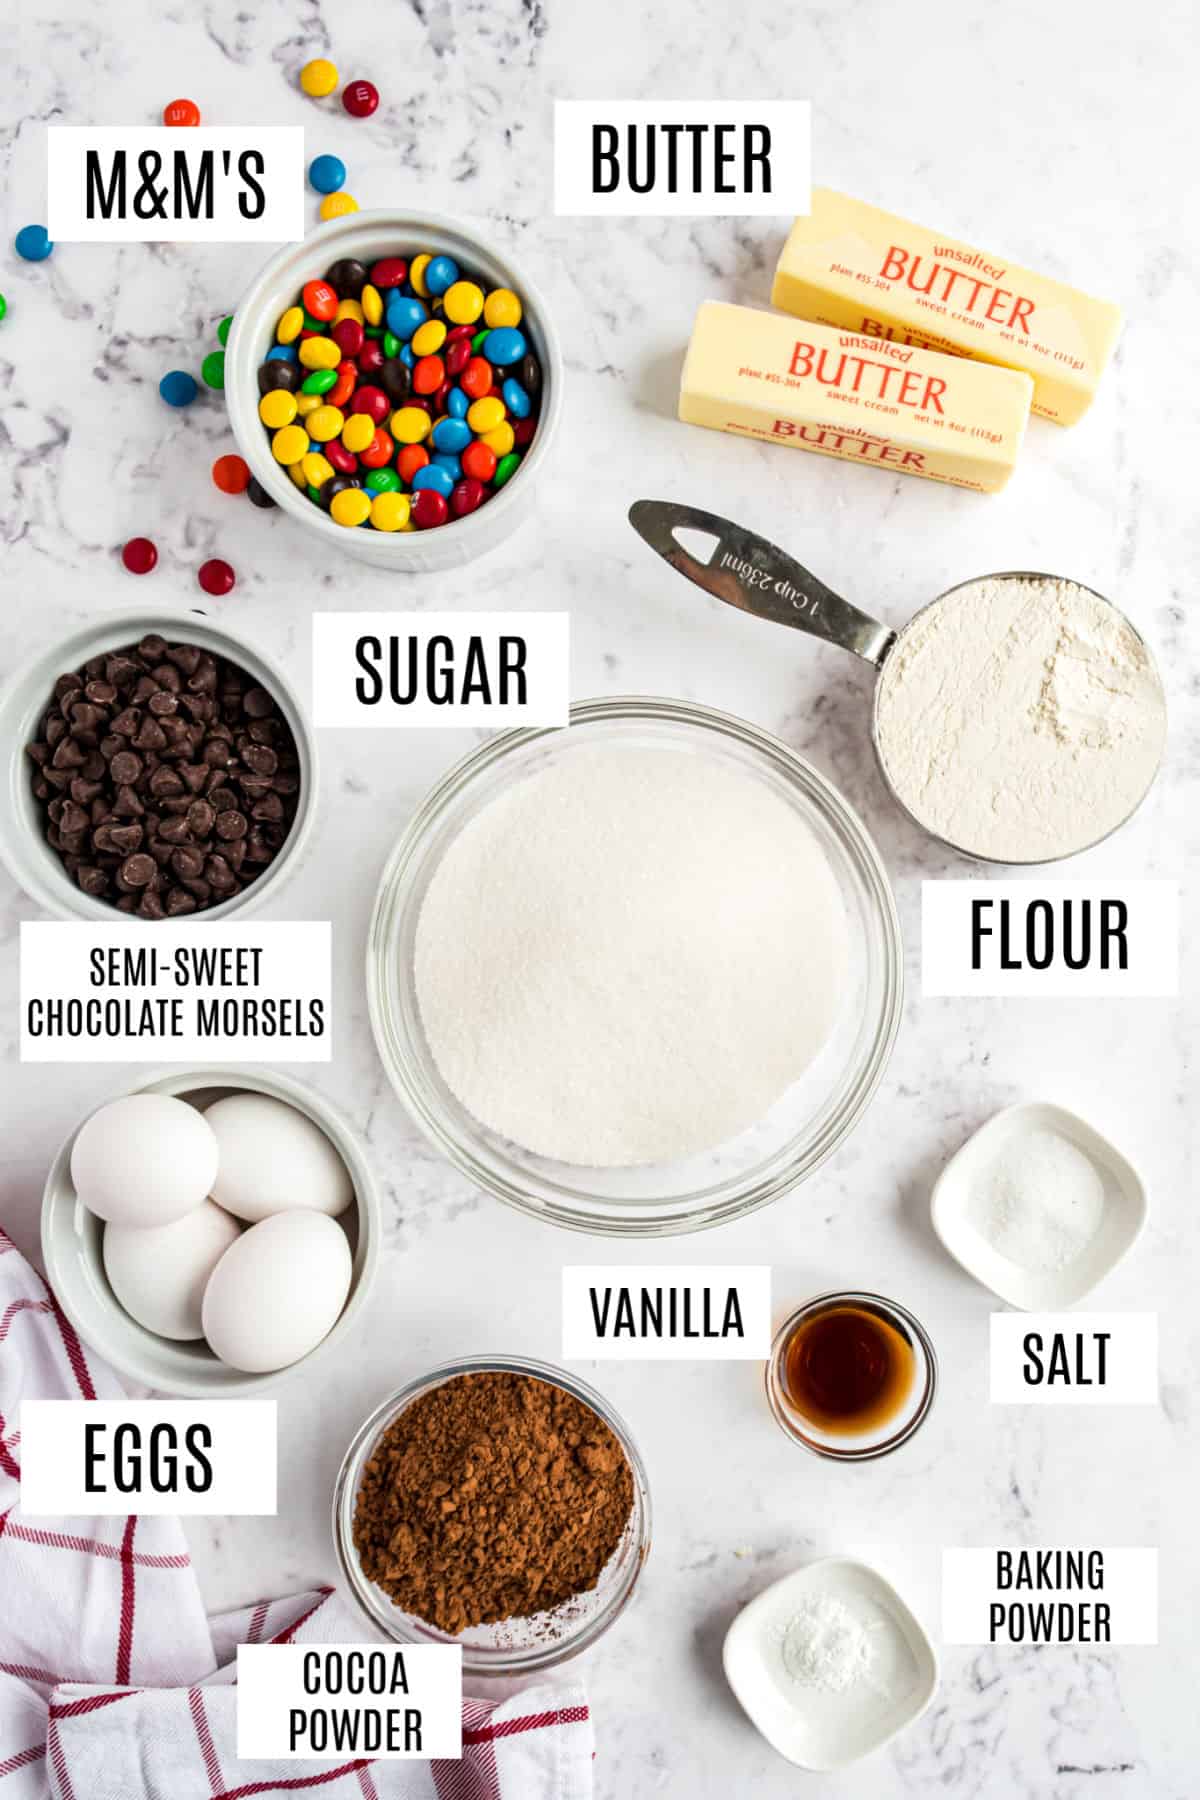 Ingredients needed for M&M's brownies.